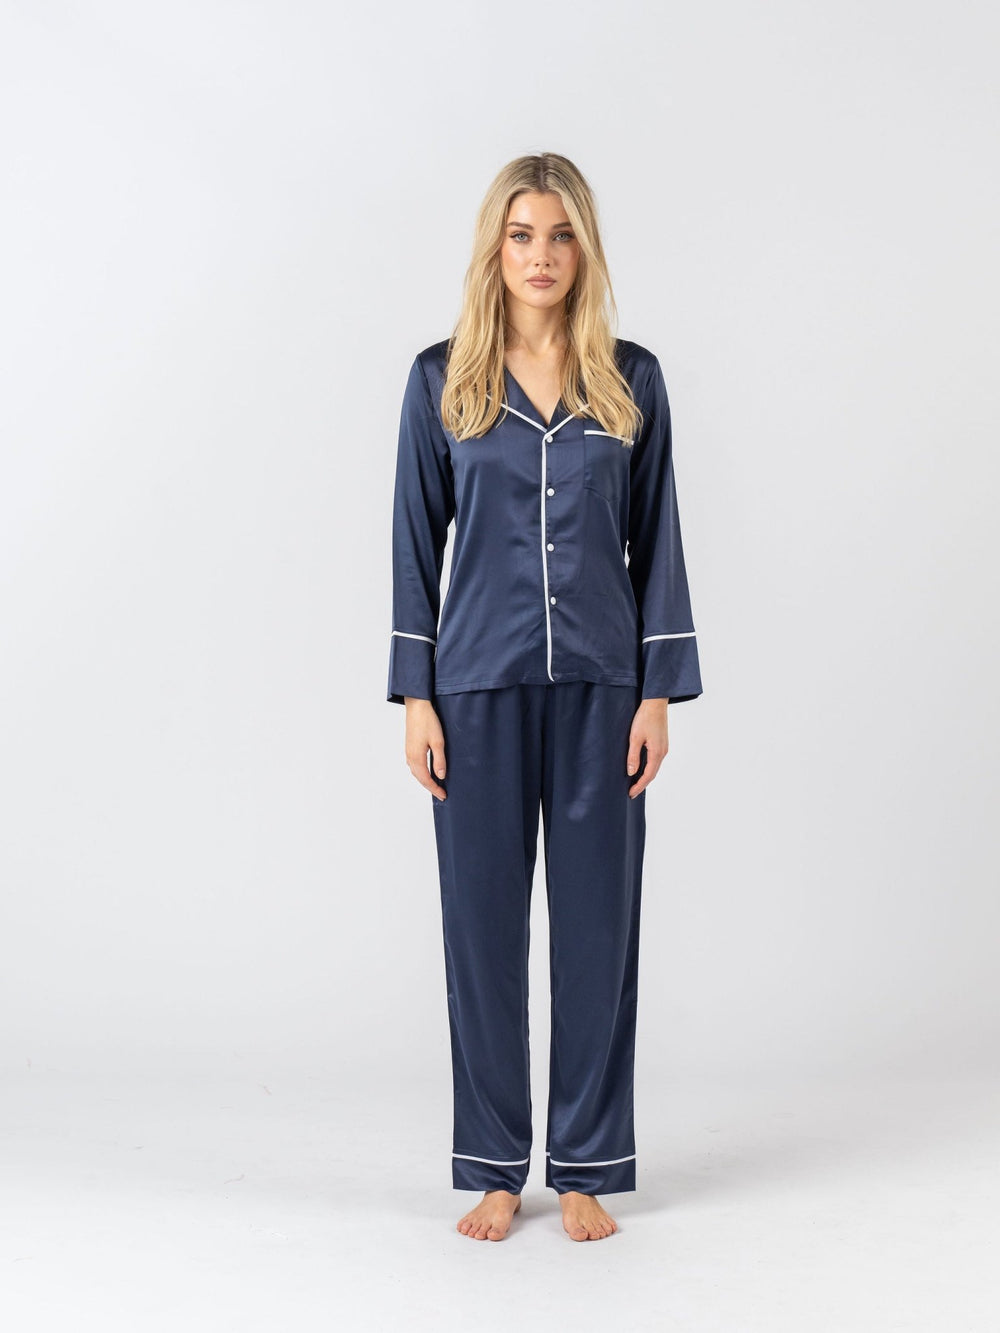 Personalised Sleepwear: Silky Satin Pyjama Sets  Midnight Mischief –  Midnight Mischief Sleepwear